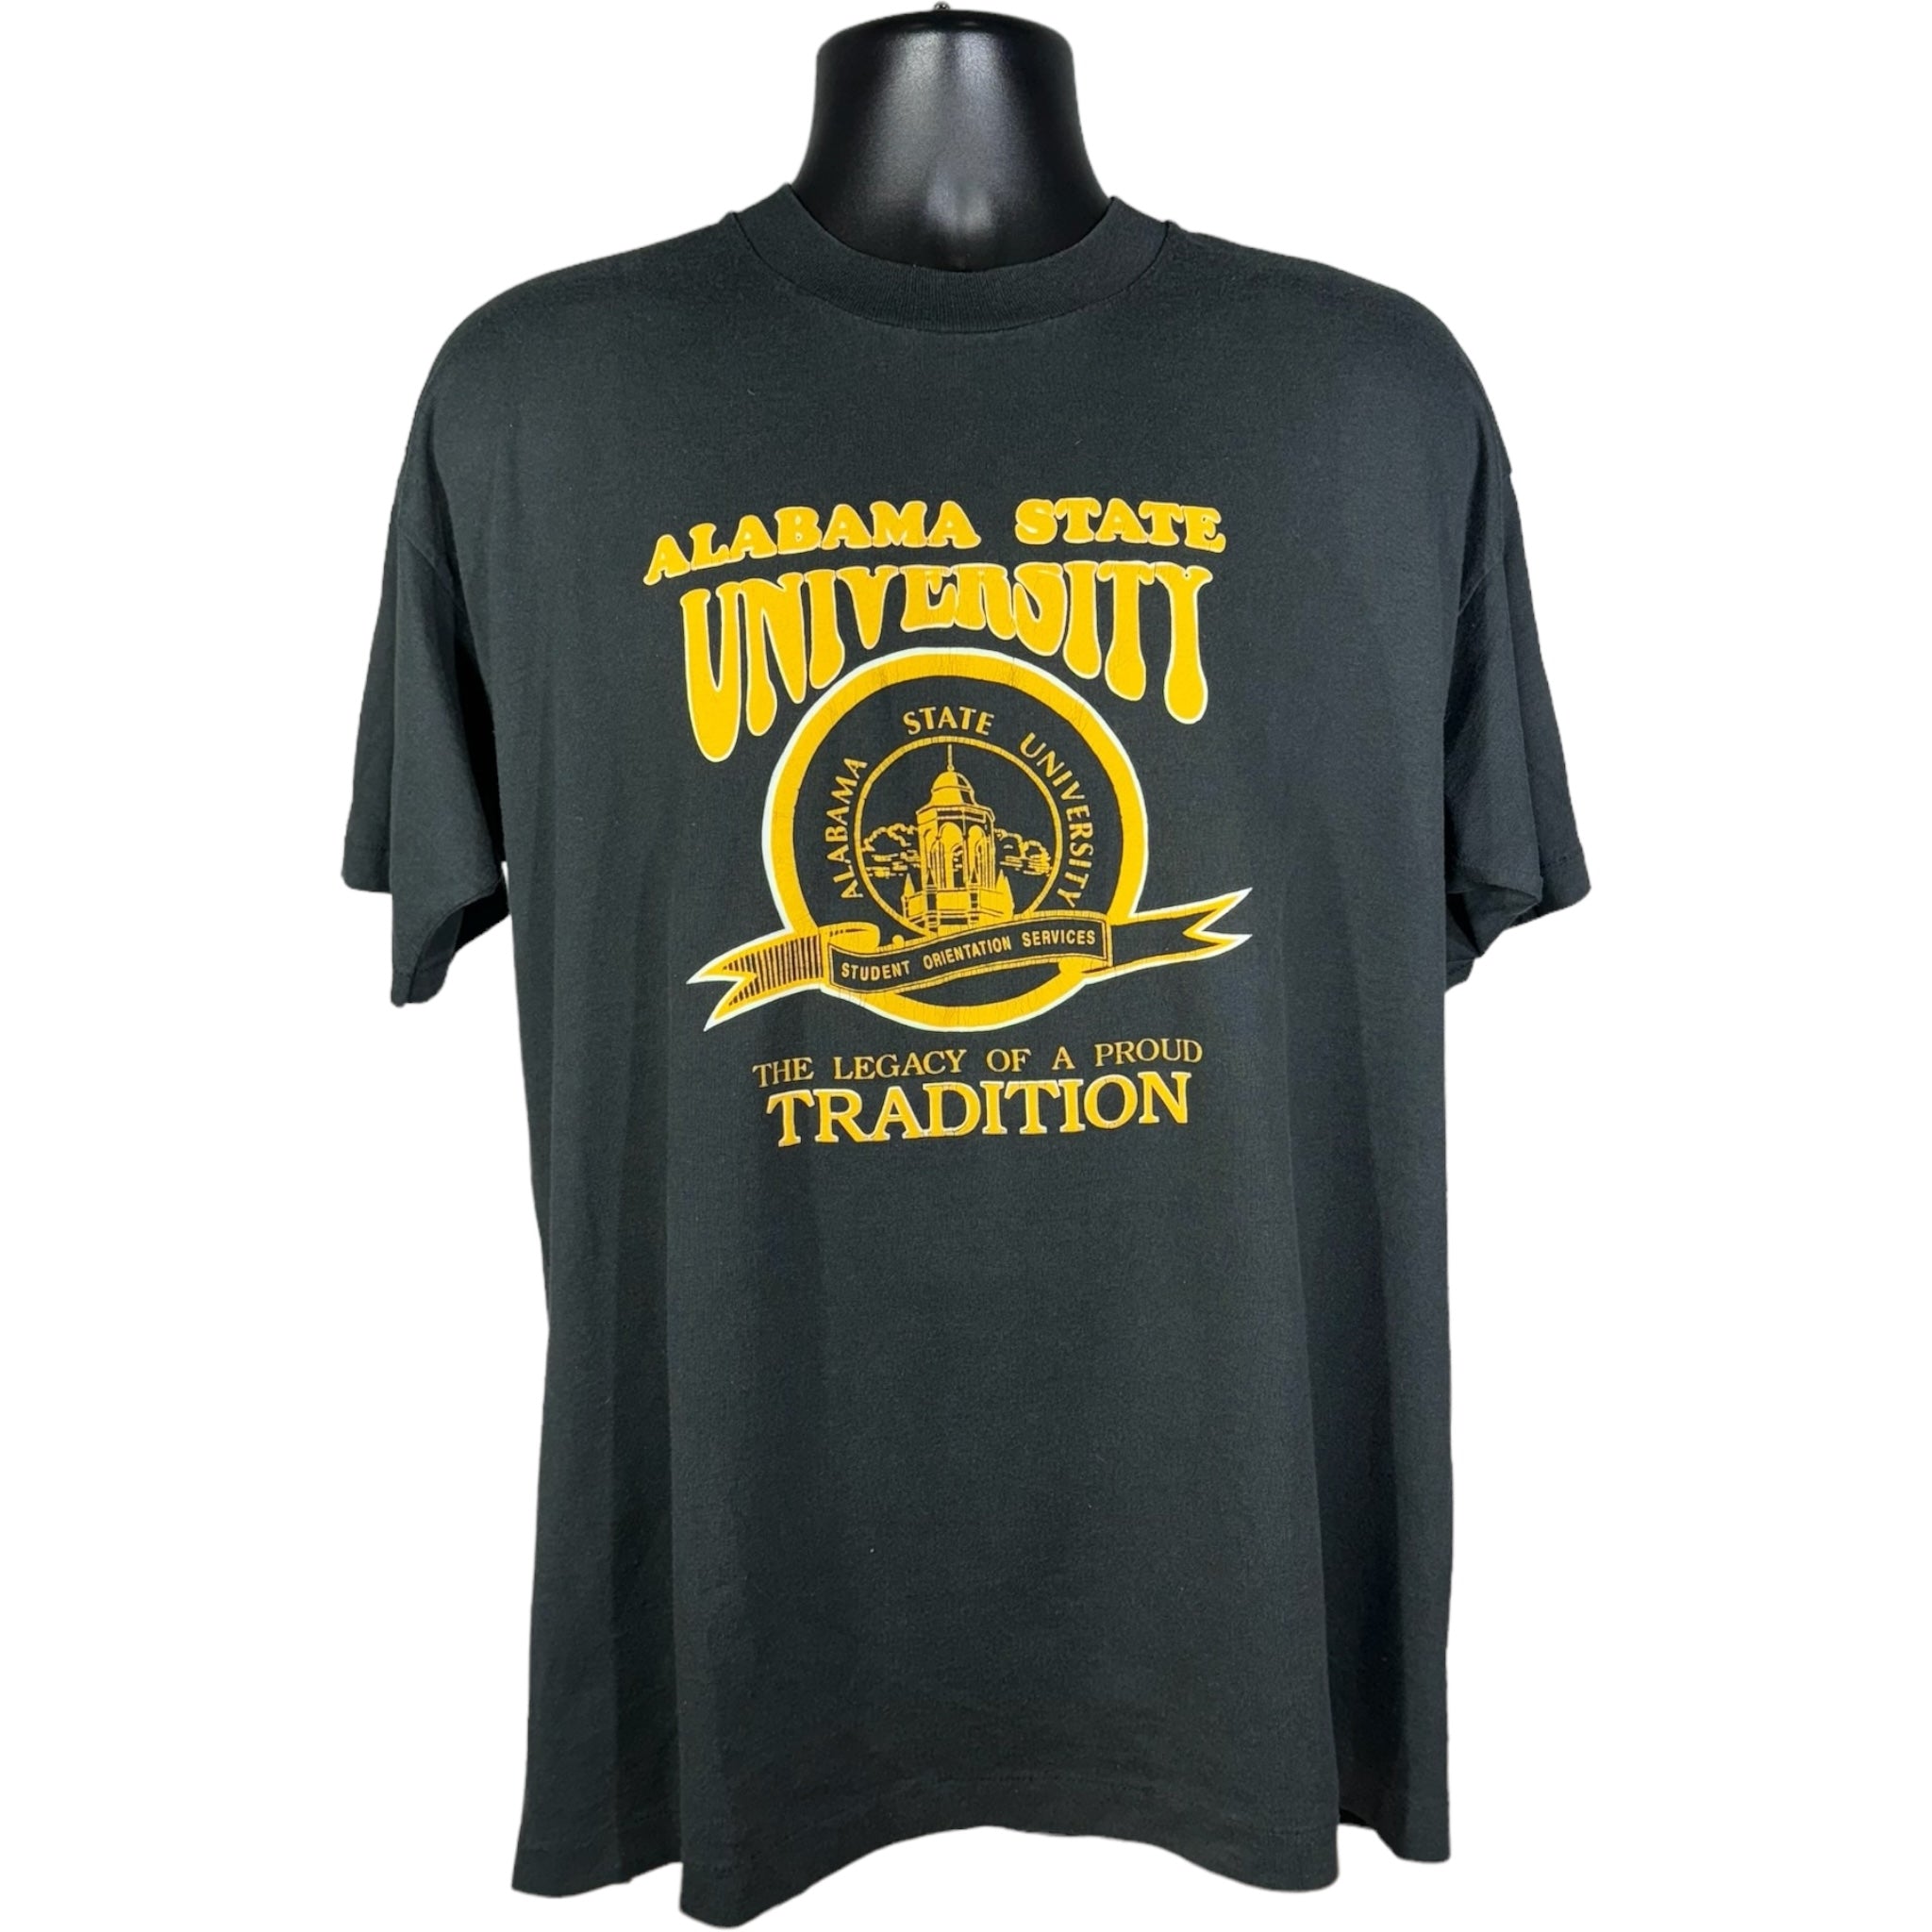 Vintage Alabama State University "Tradition" Tee